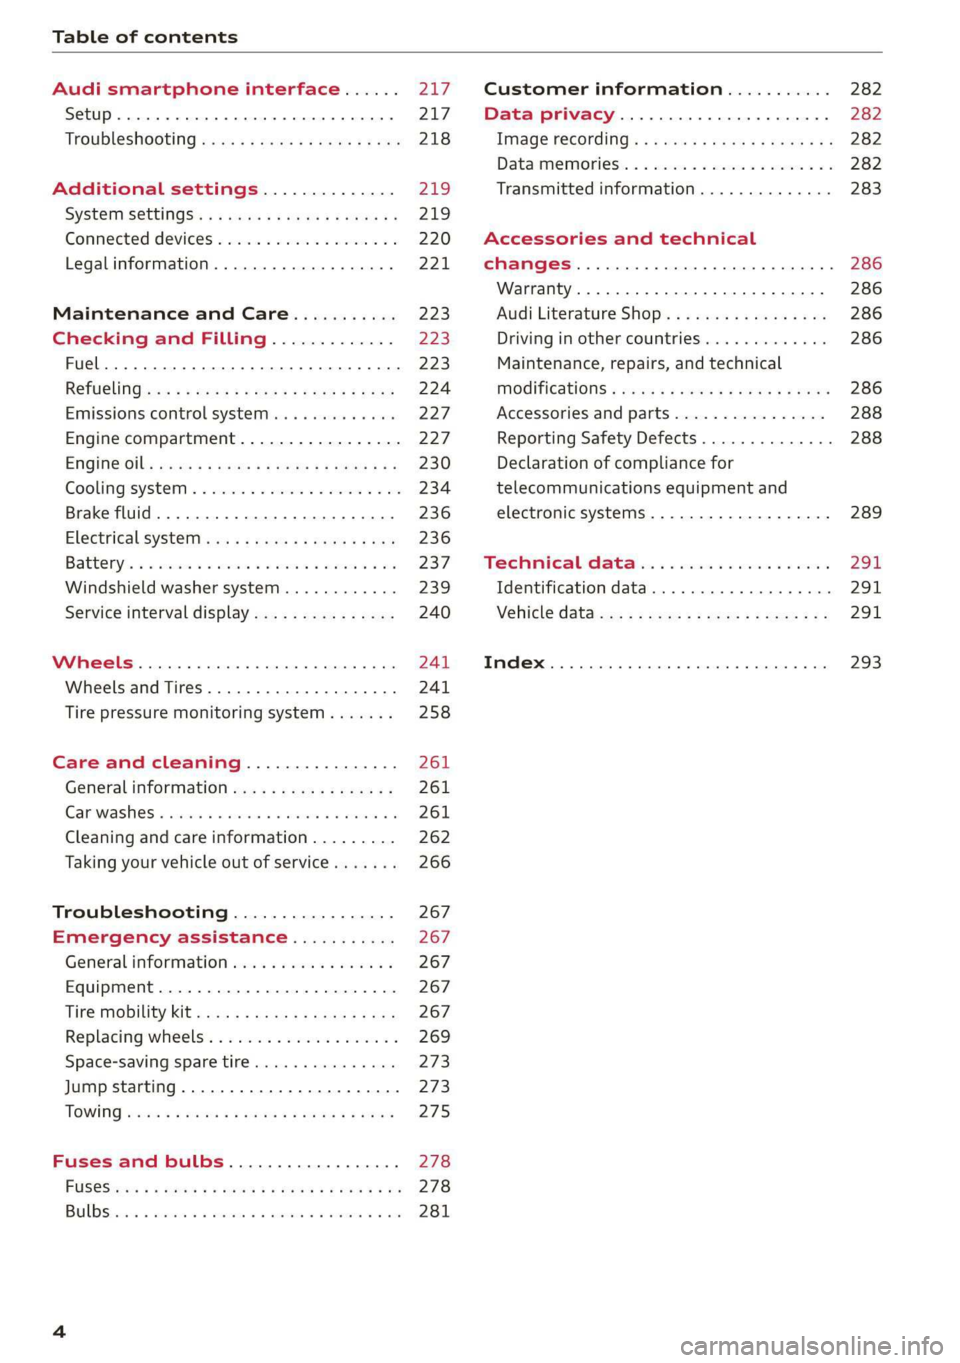 AUDI A7 2020  Owners Manual Table of contents 
  
  
Audi smartphone interface...... uy 
Setup... eee eee ee eee 217 
TrOuUBLESHOOtING wees «  & wees «  2 eos so eee 218 
Additional settings.............. 219 
System settingS.